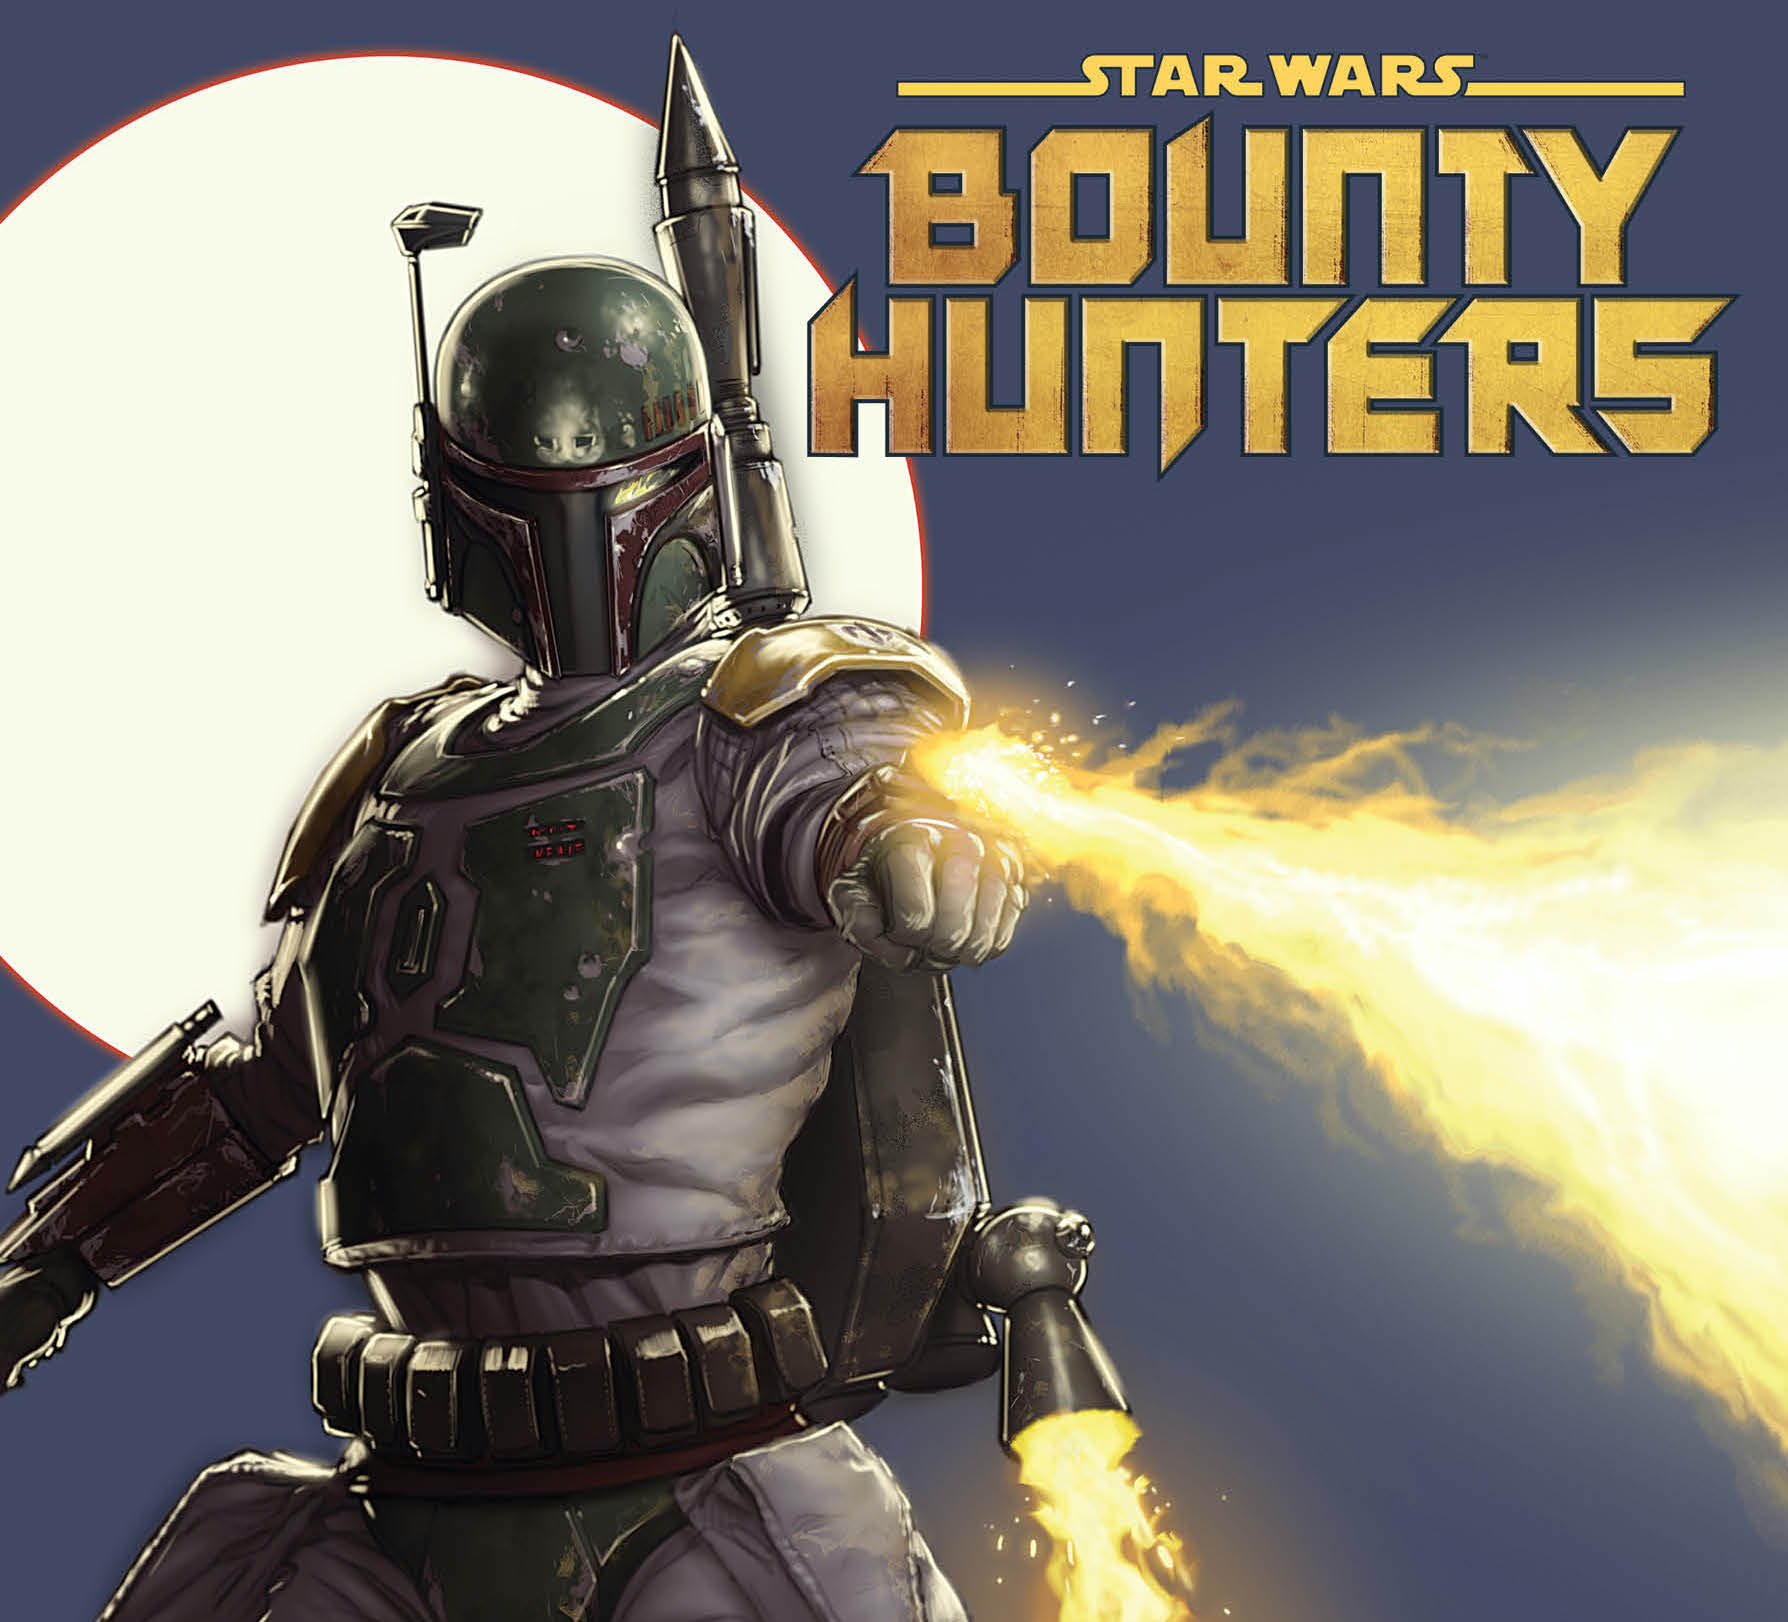 Star Wars: Bounty Hunters #1 Review